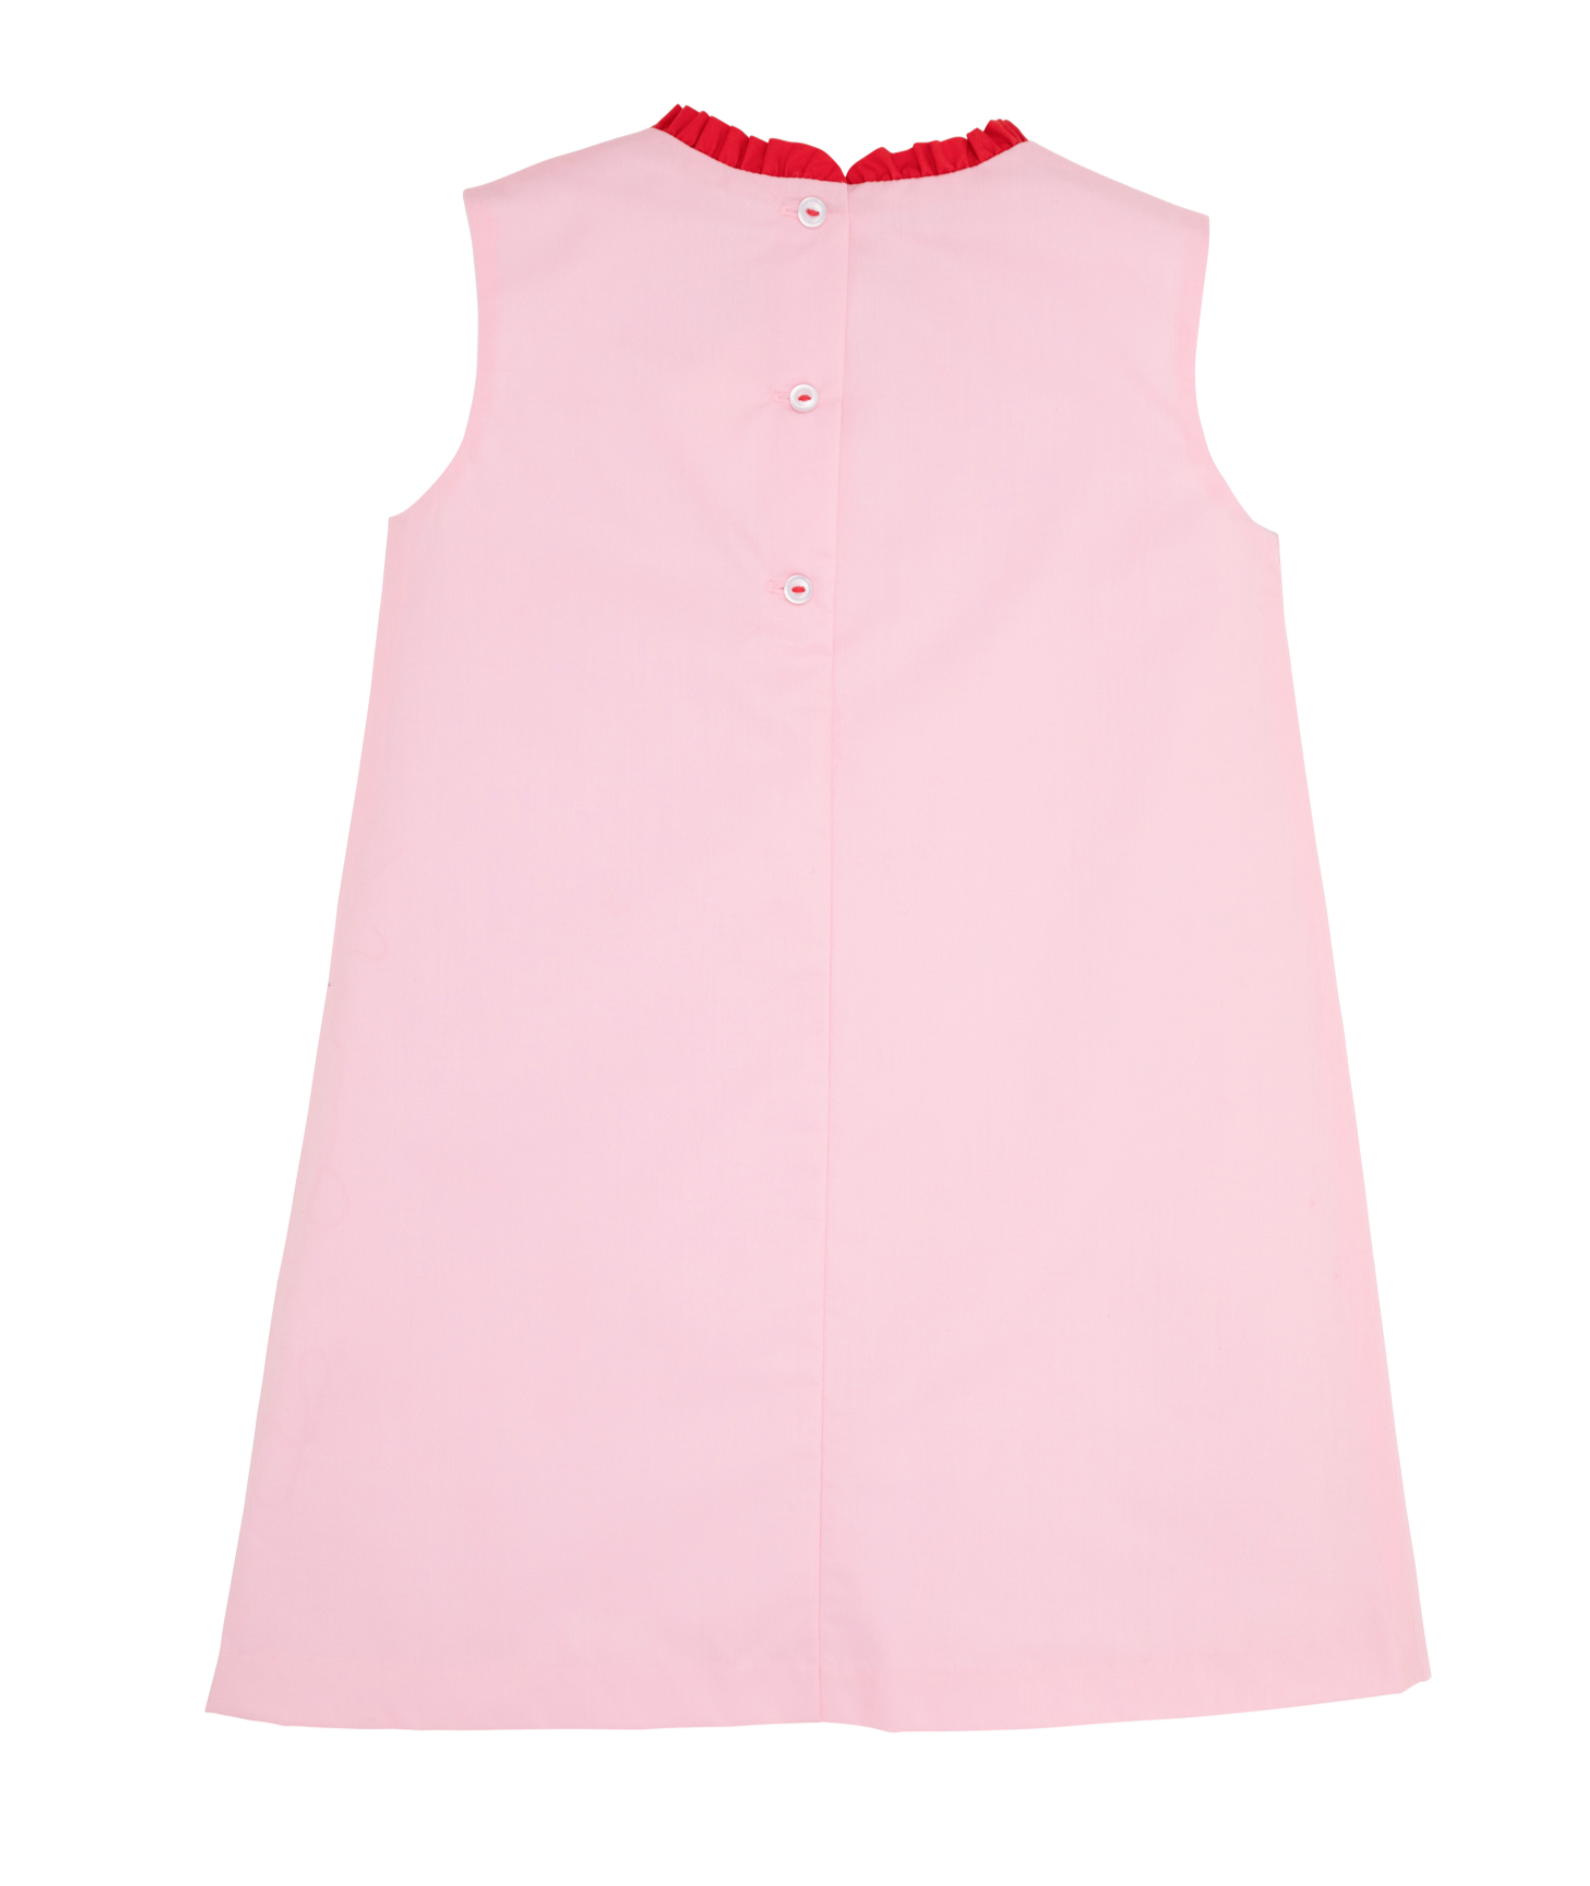 The Beaufort Bonnet Company - Lizzie's Luxe Leisure Dress - Apple - Pier Party Pink/Richmond Red